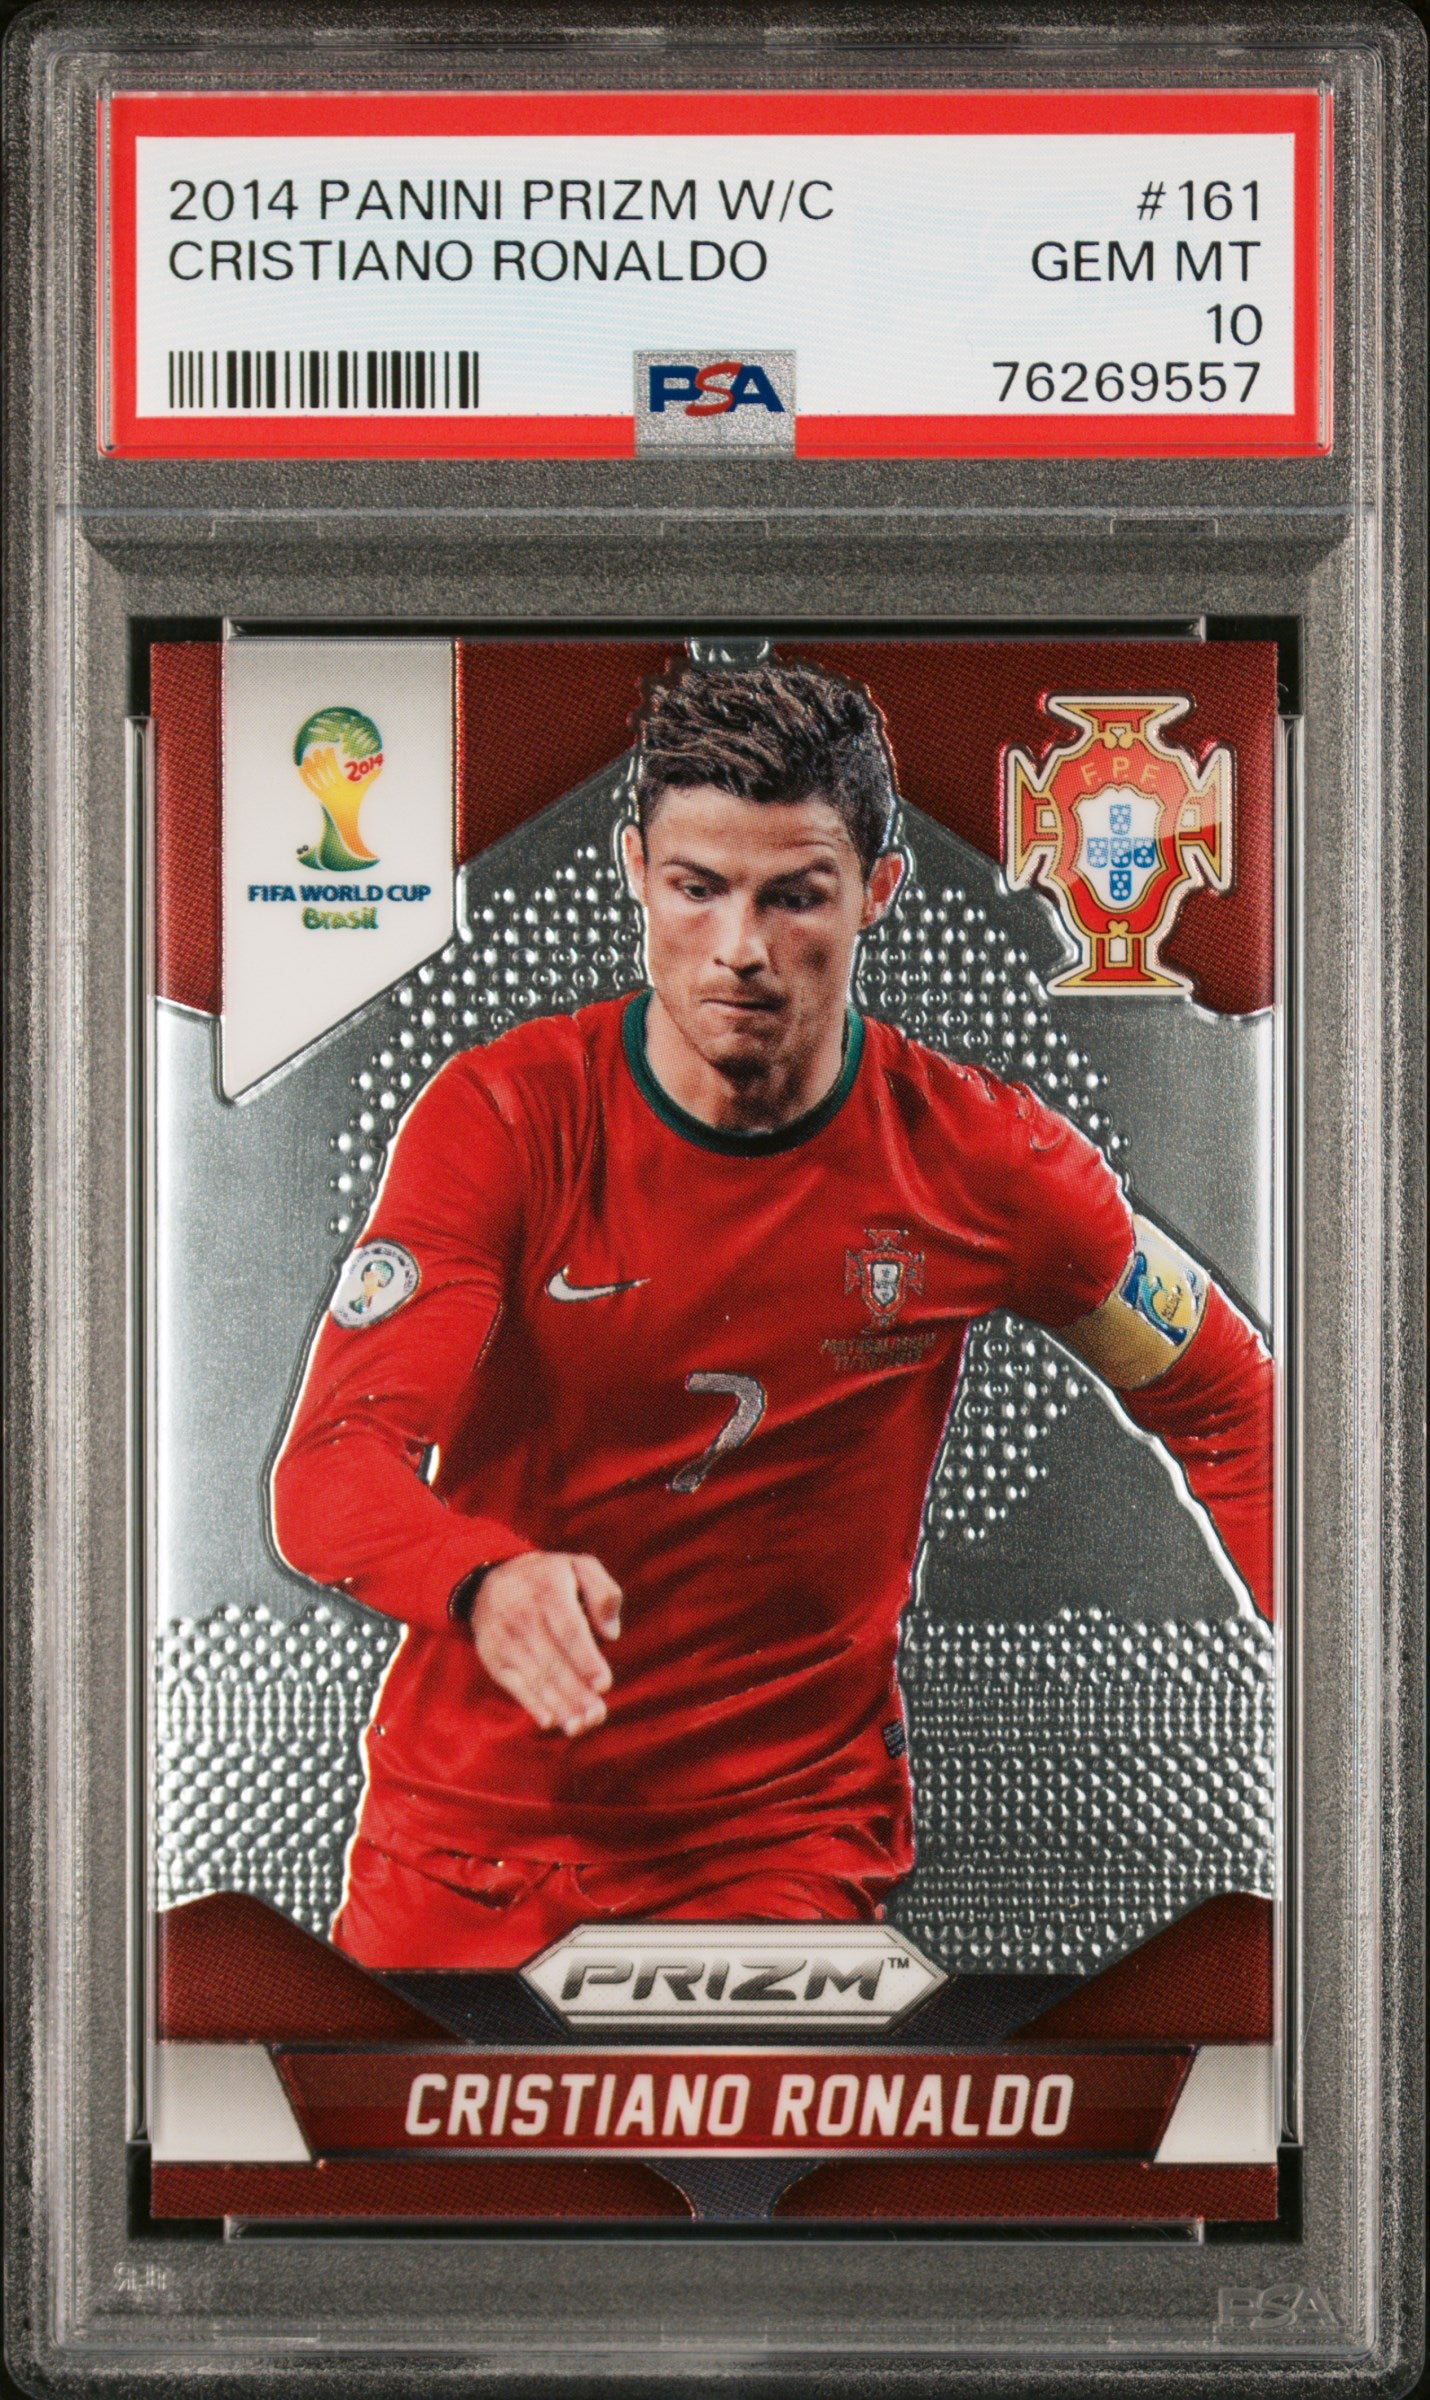 Cristiano Ronaldo 2014 Panini Prizm World Cup Soccer Card #161 Graded PSA 10